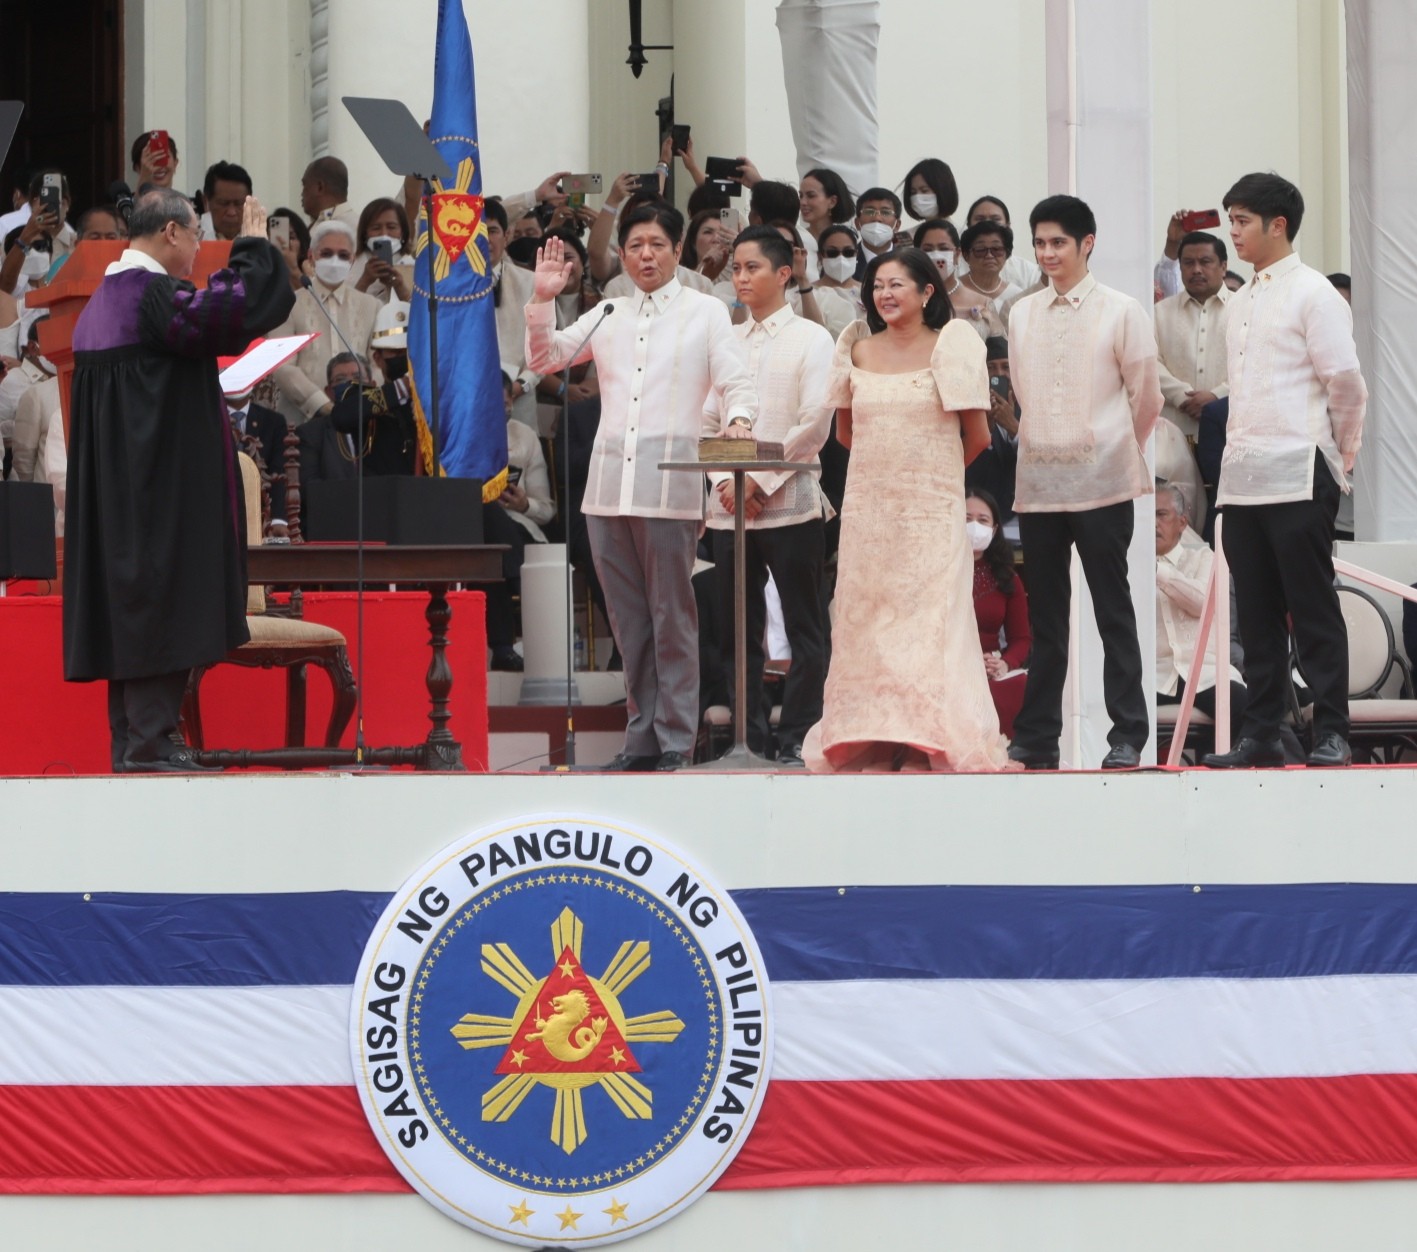 Bongbong Marcos inauguration